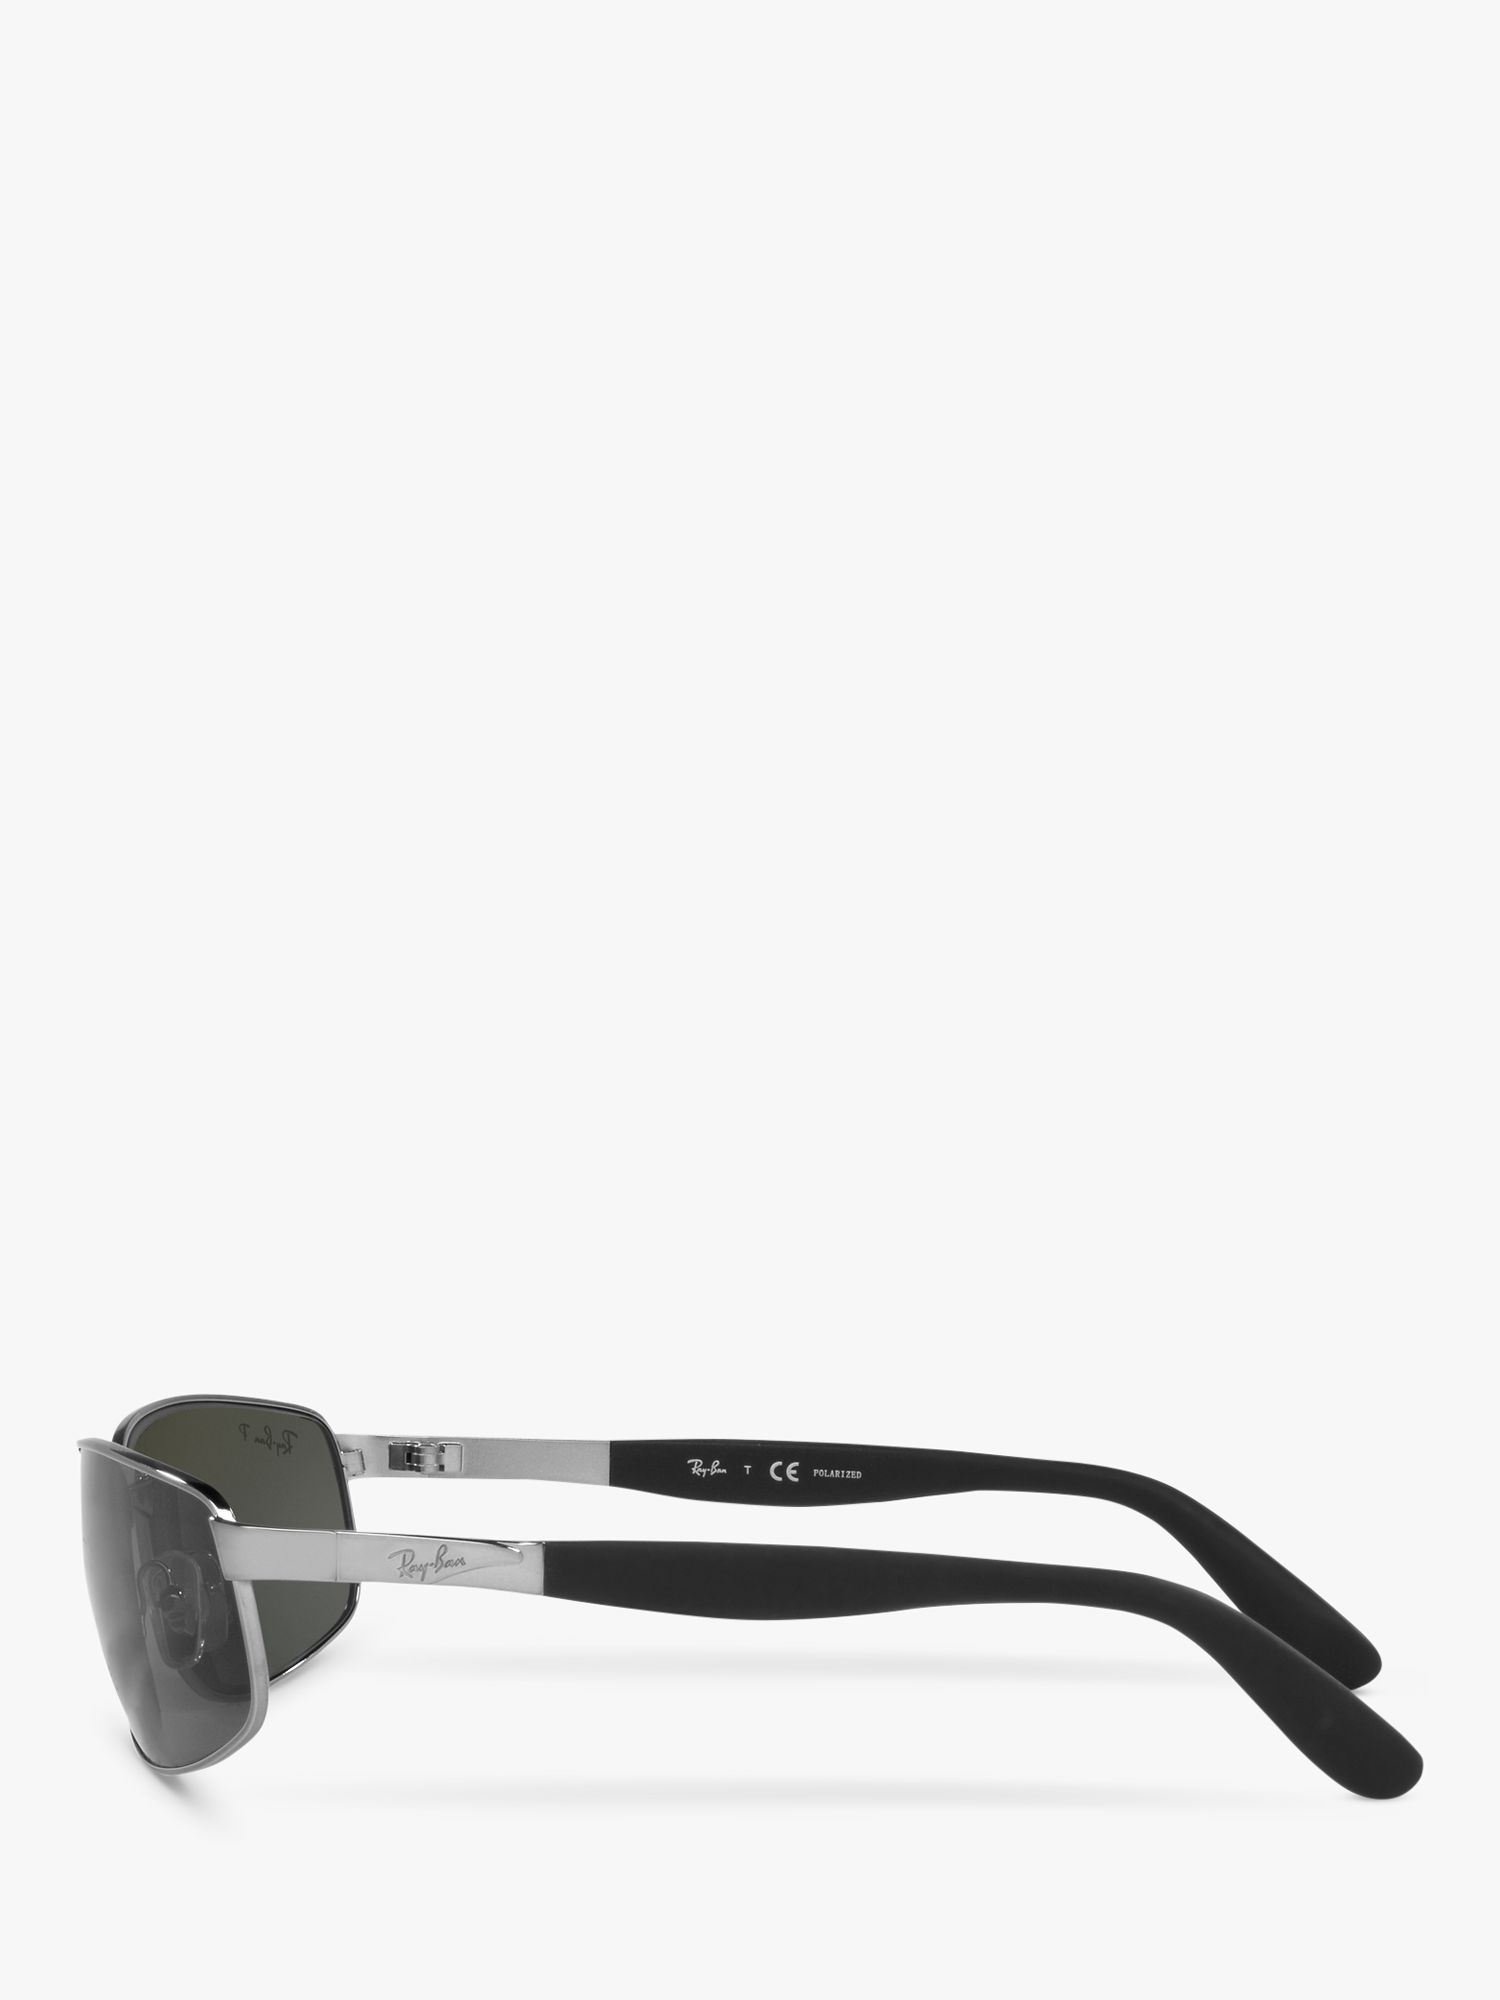 Ray-Ban RB3254 Men's Polarised Rectangular Sunglasses, Gunmetal/Grey